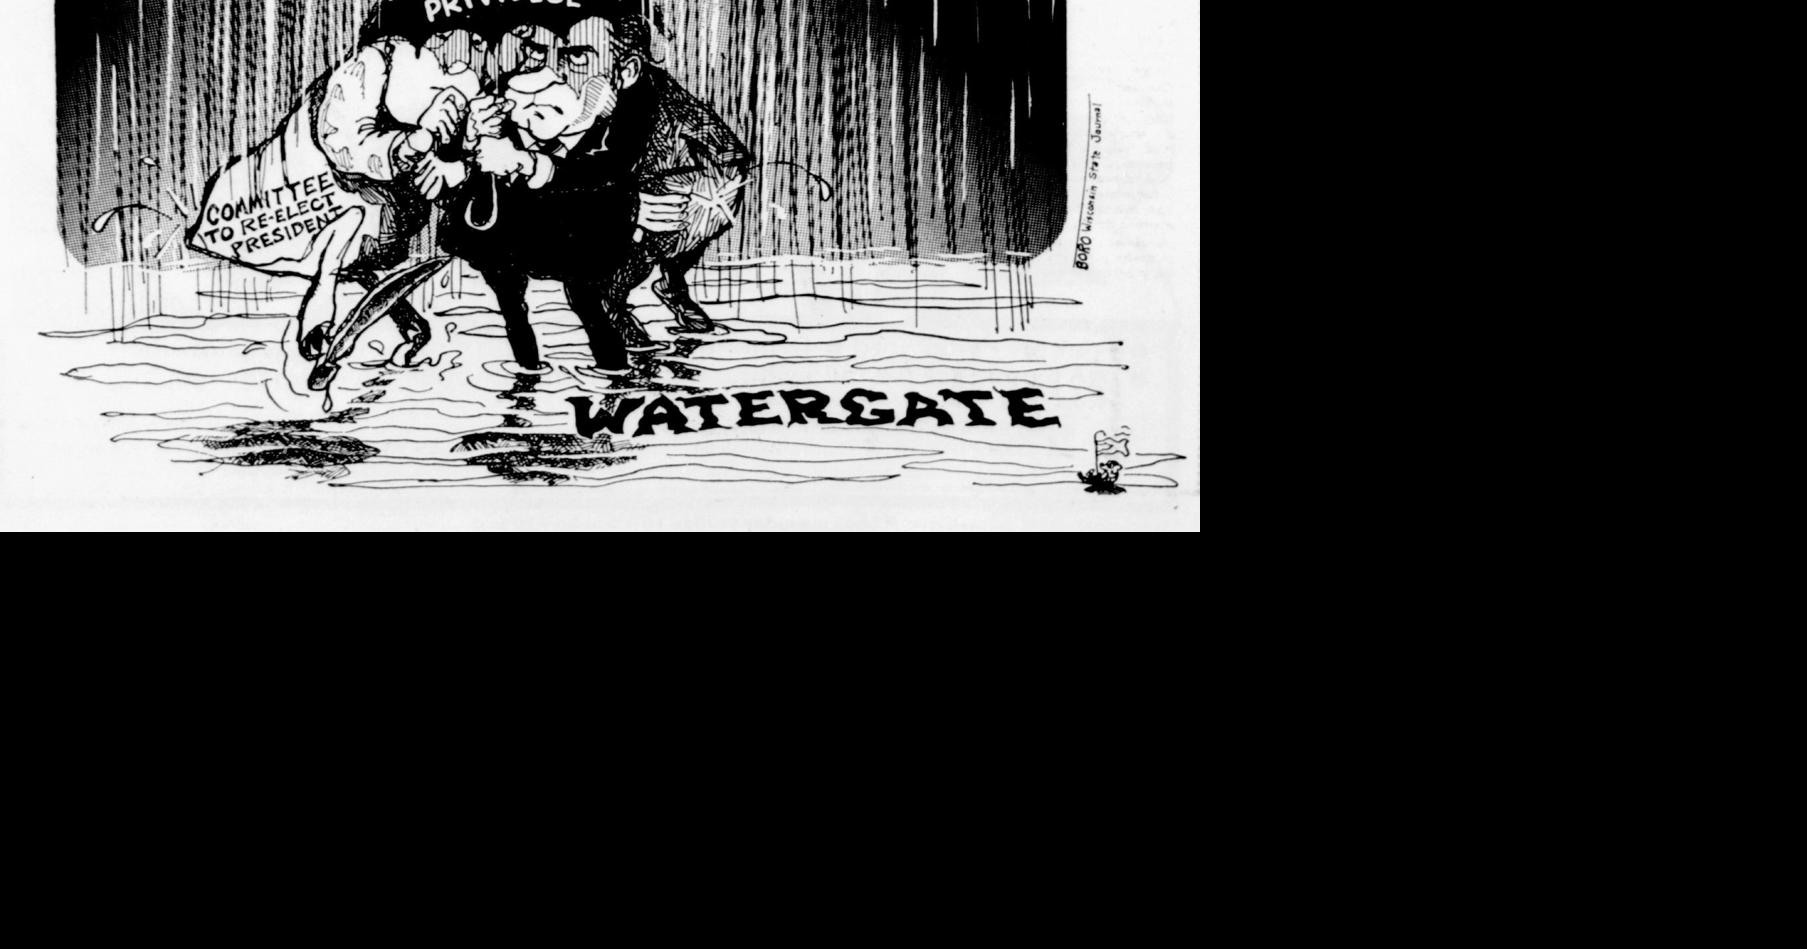 watergate scandal political cartoons